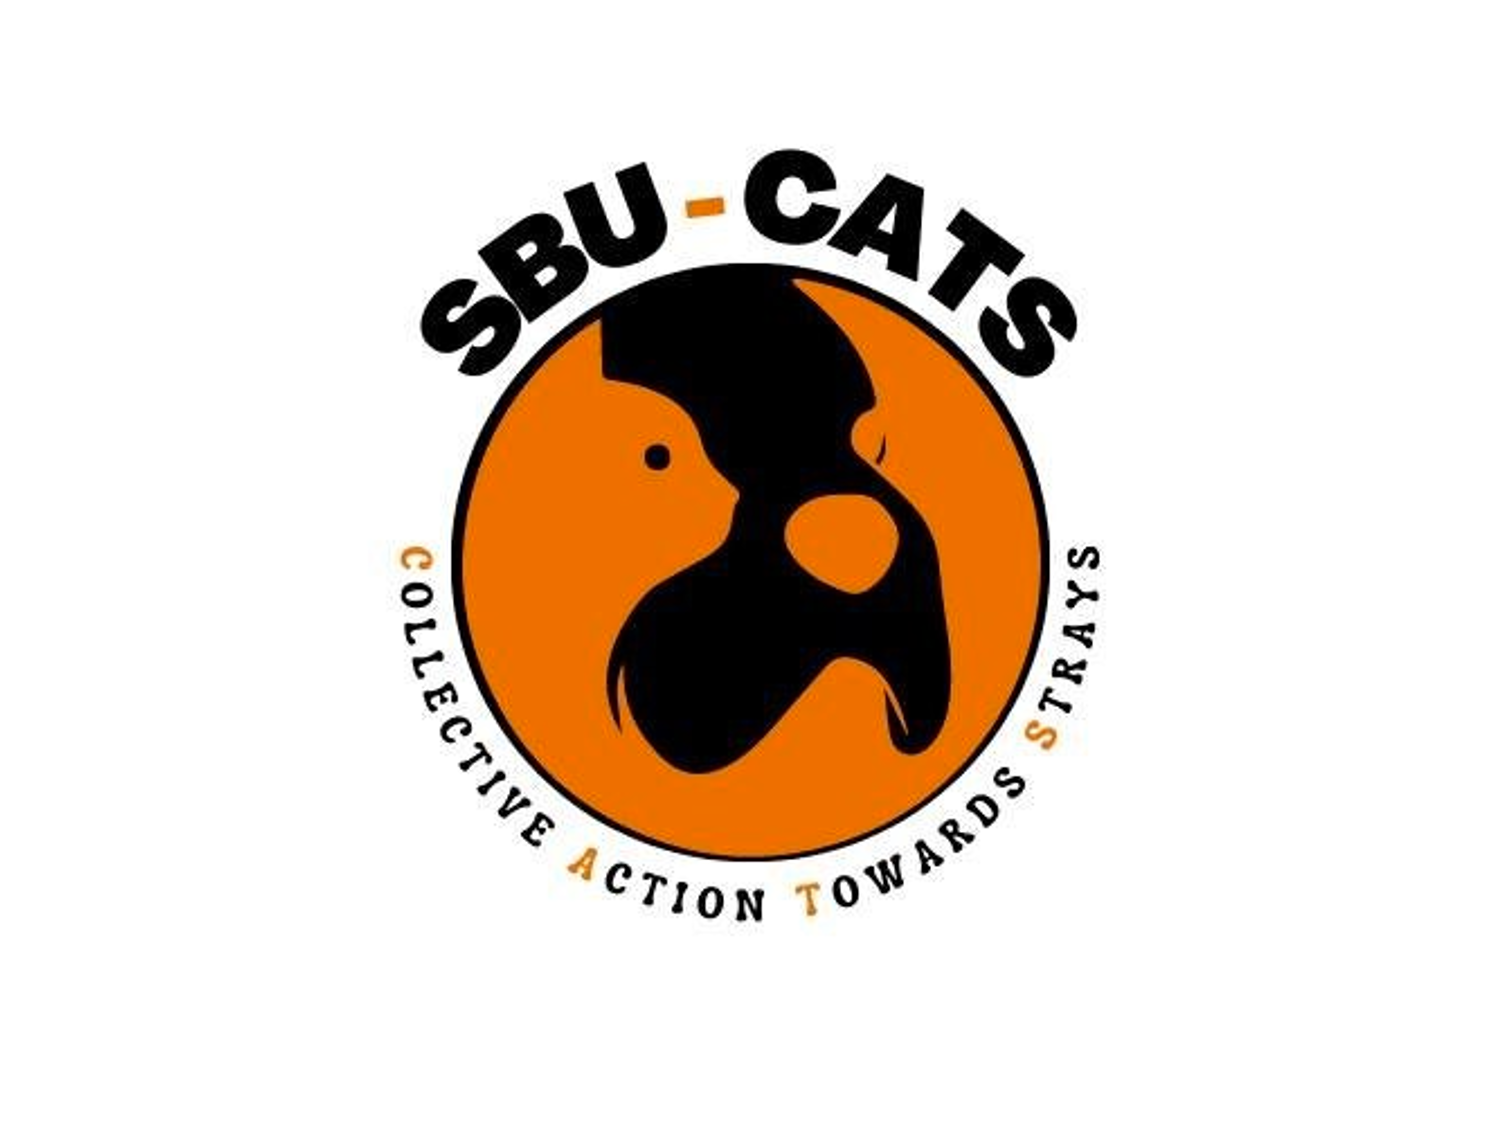 Bedan animal advocates launch SBU-CATS 